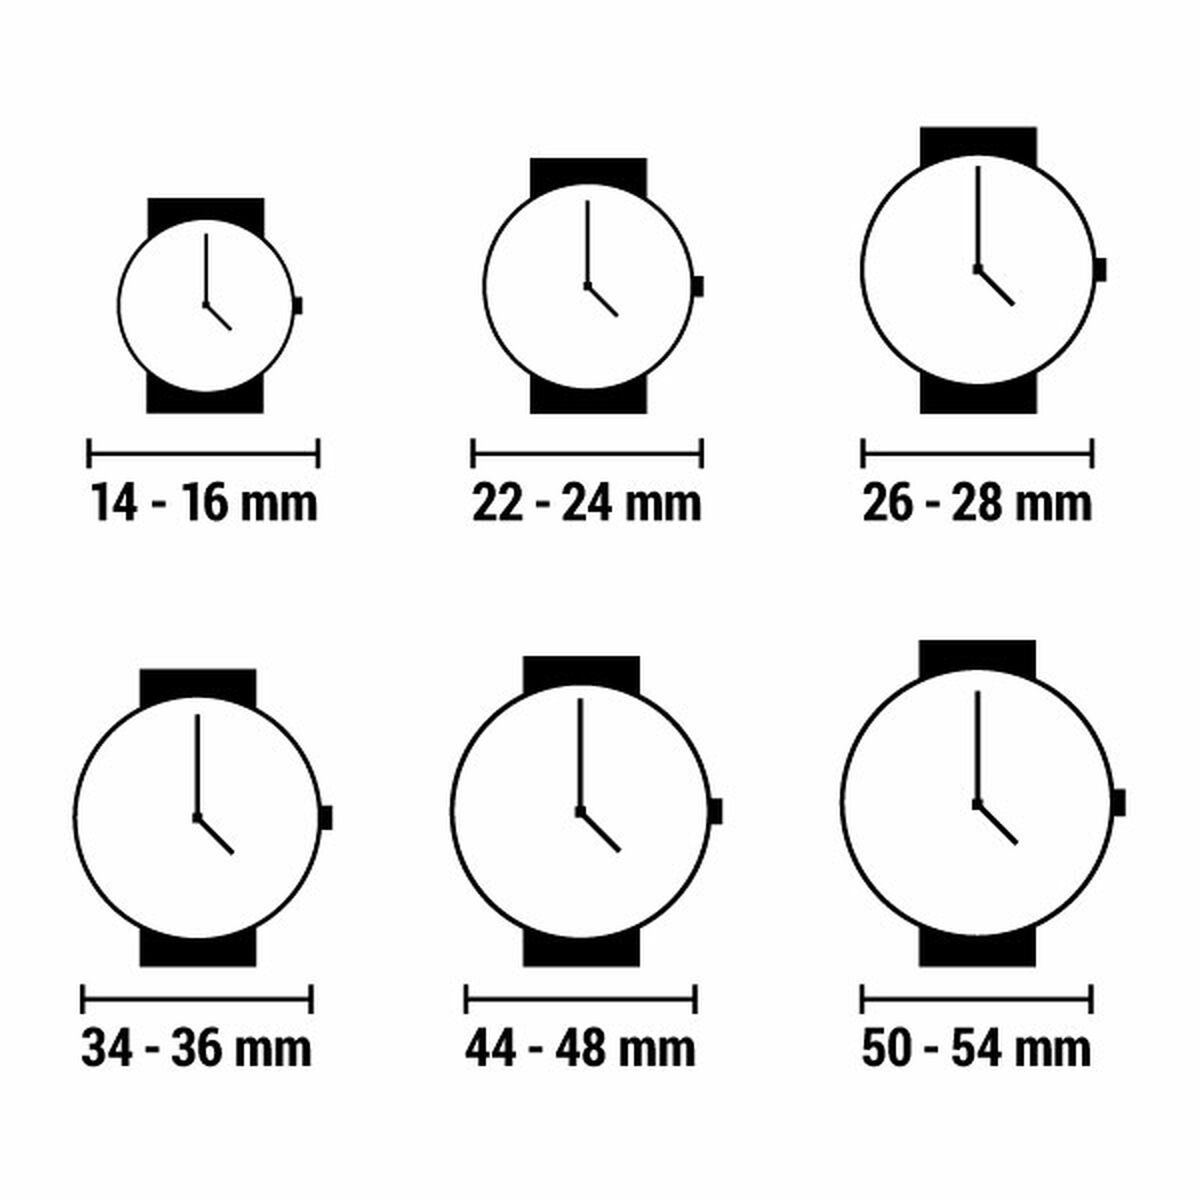 Horloge Dames Watx COWA1044-RWA1035 (Ø 43 mm)